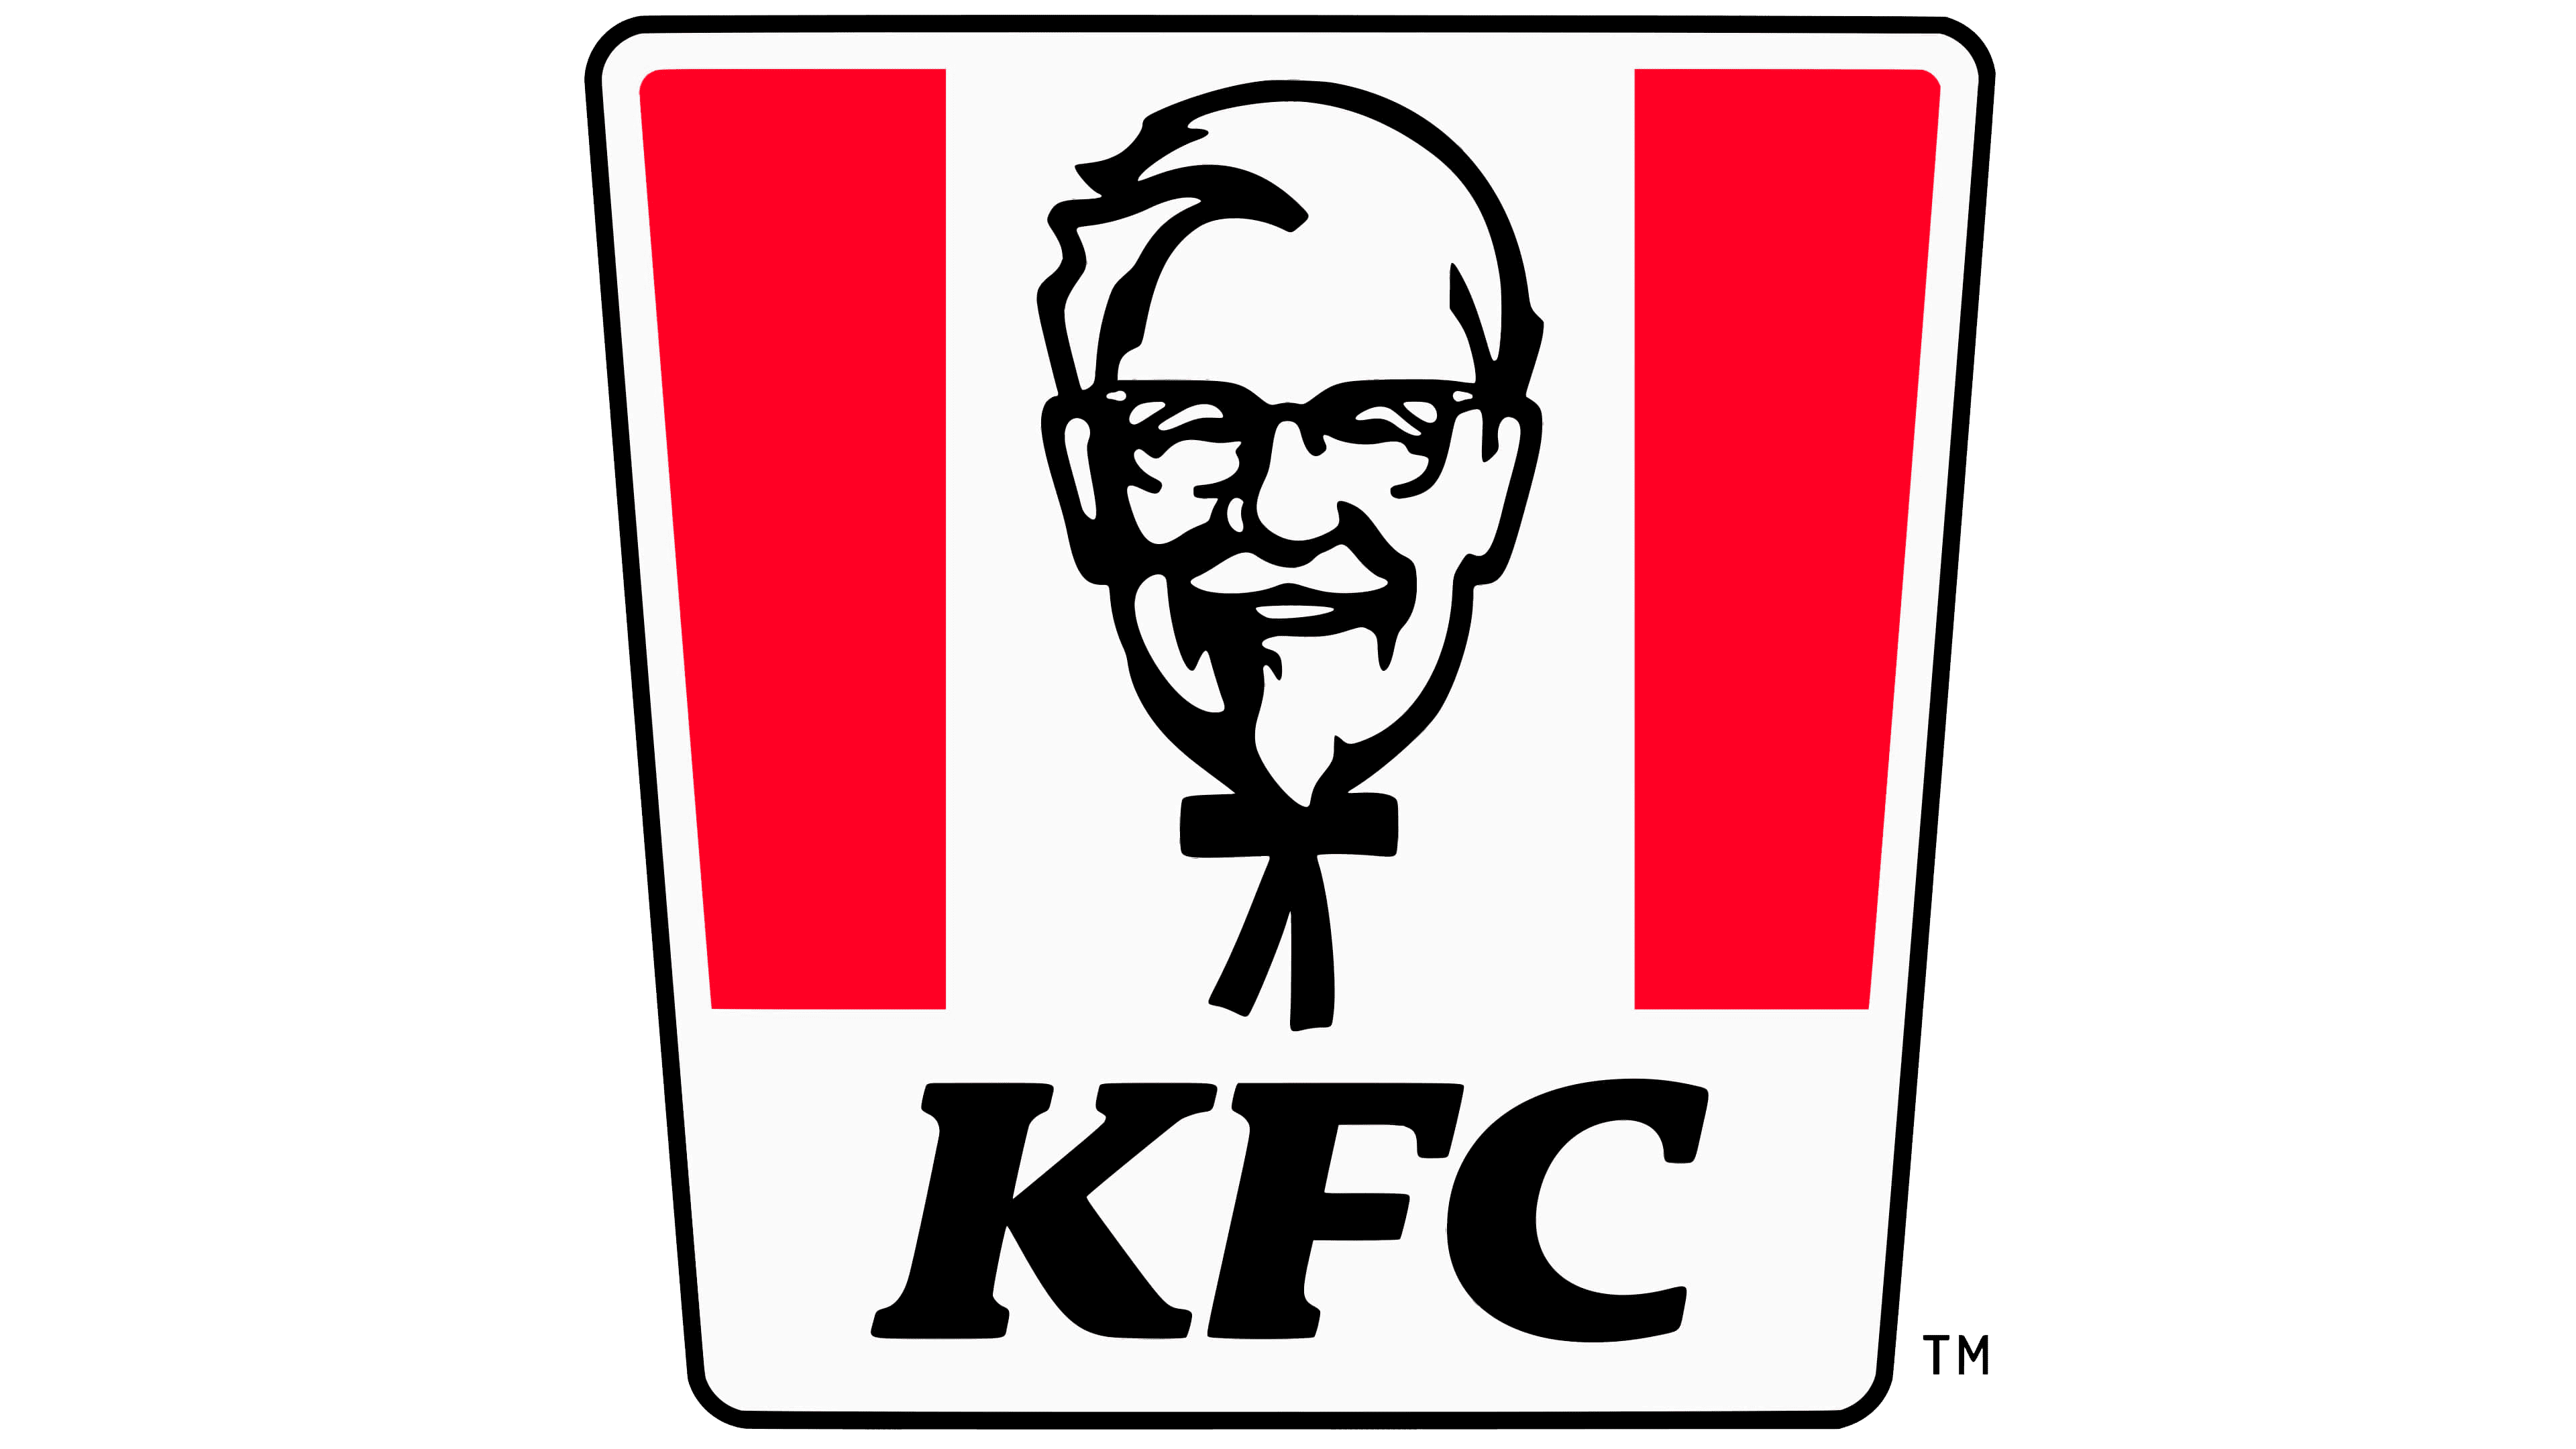 A kfc logo with the word 